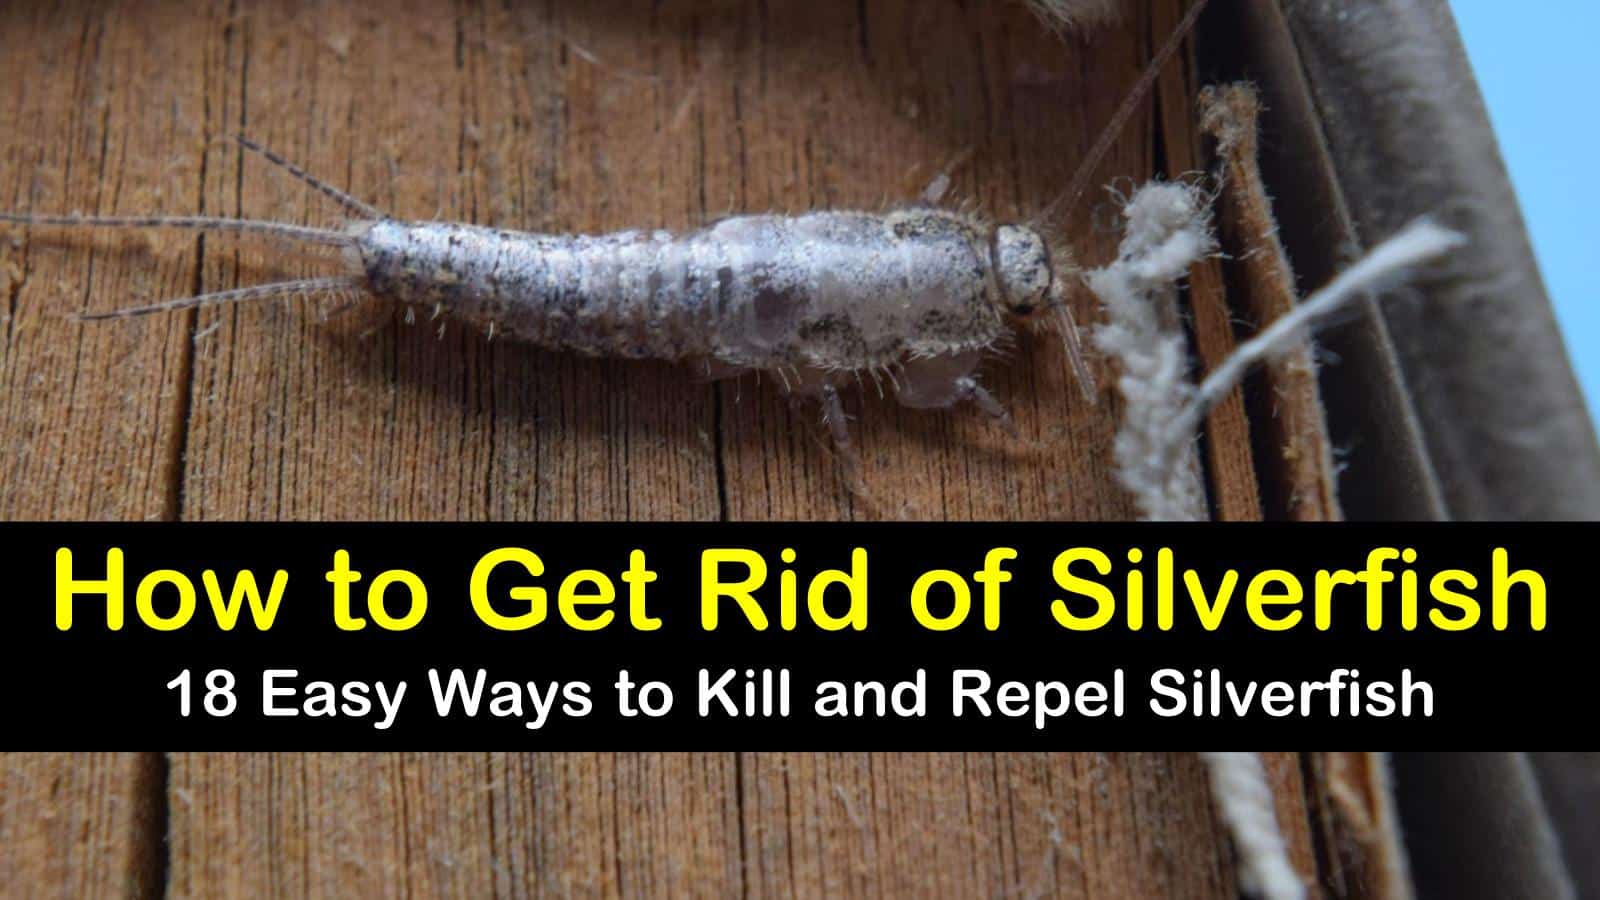 How to Make Natural Moth & Silverfish Repellant